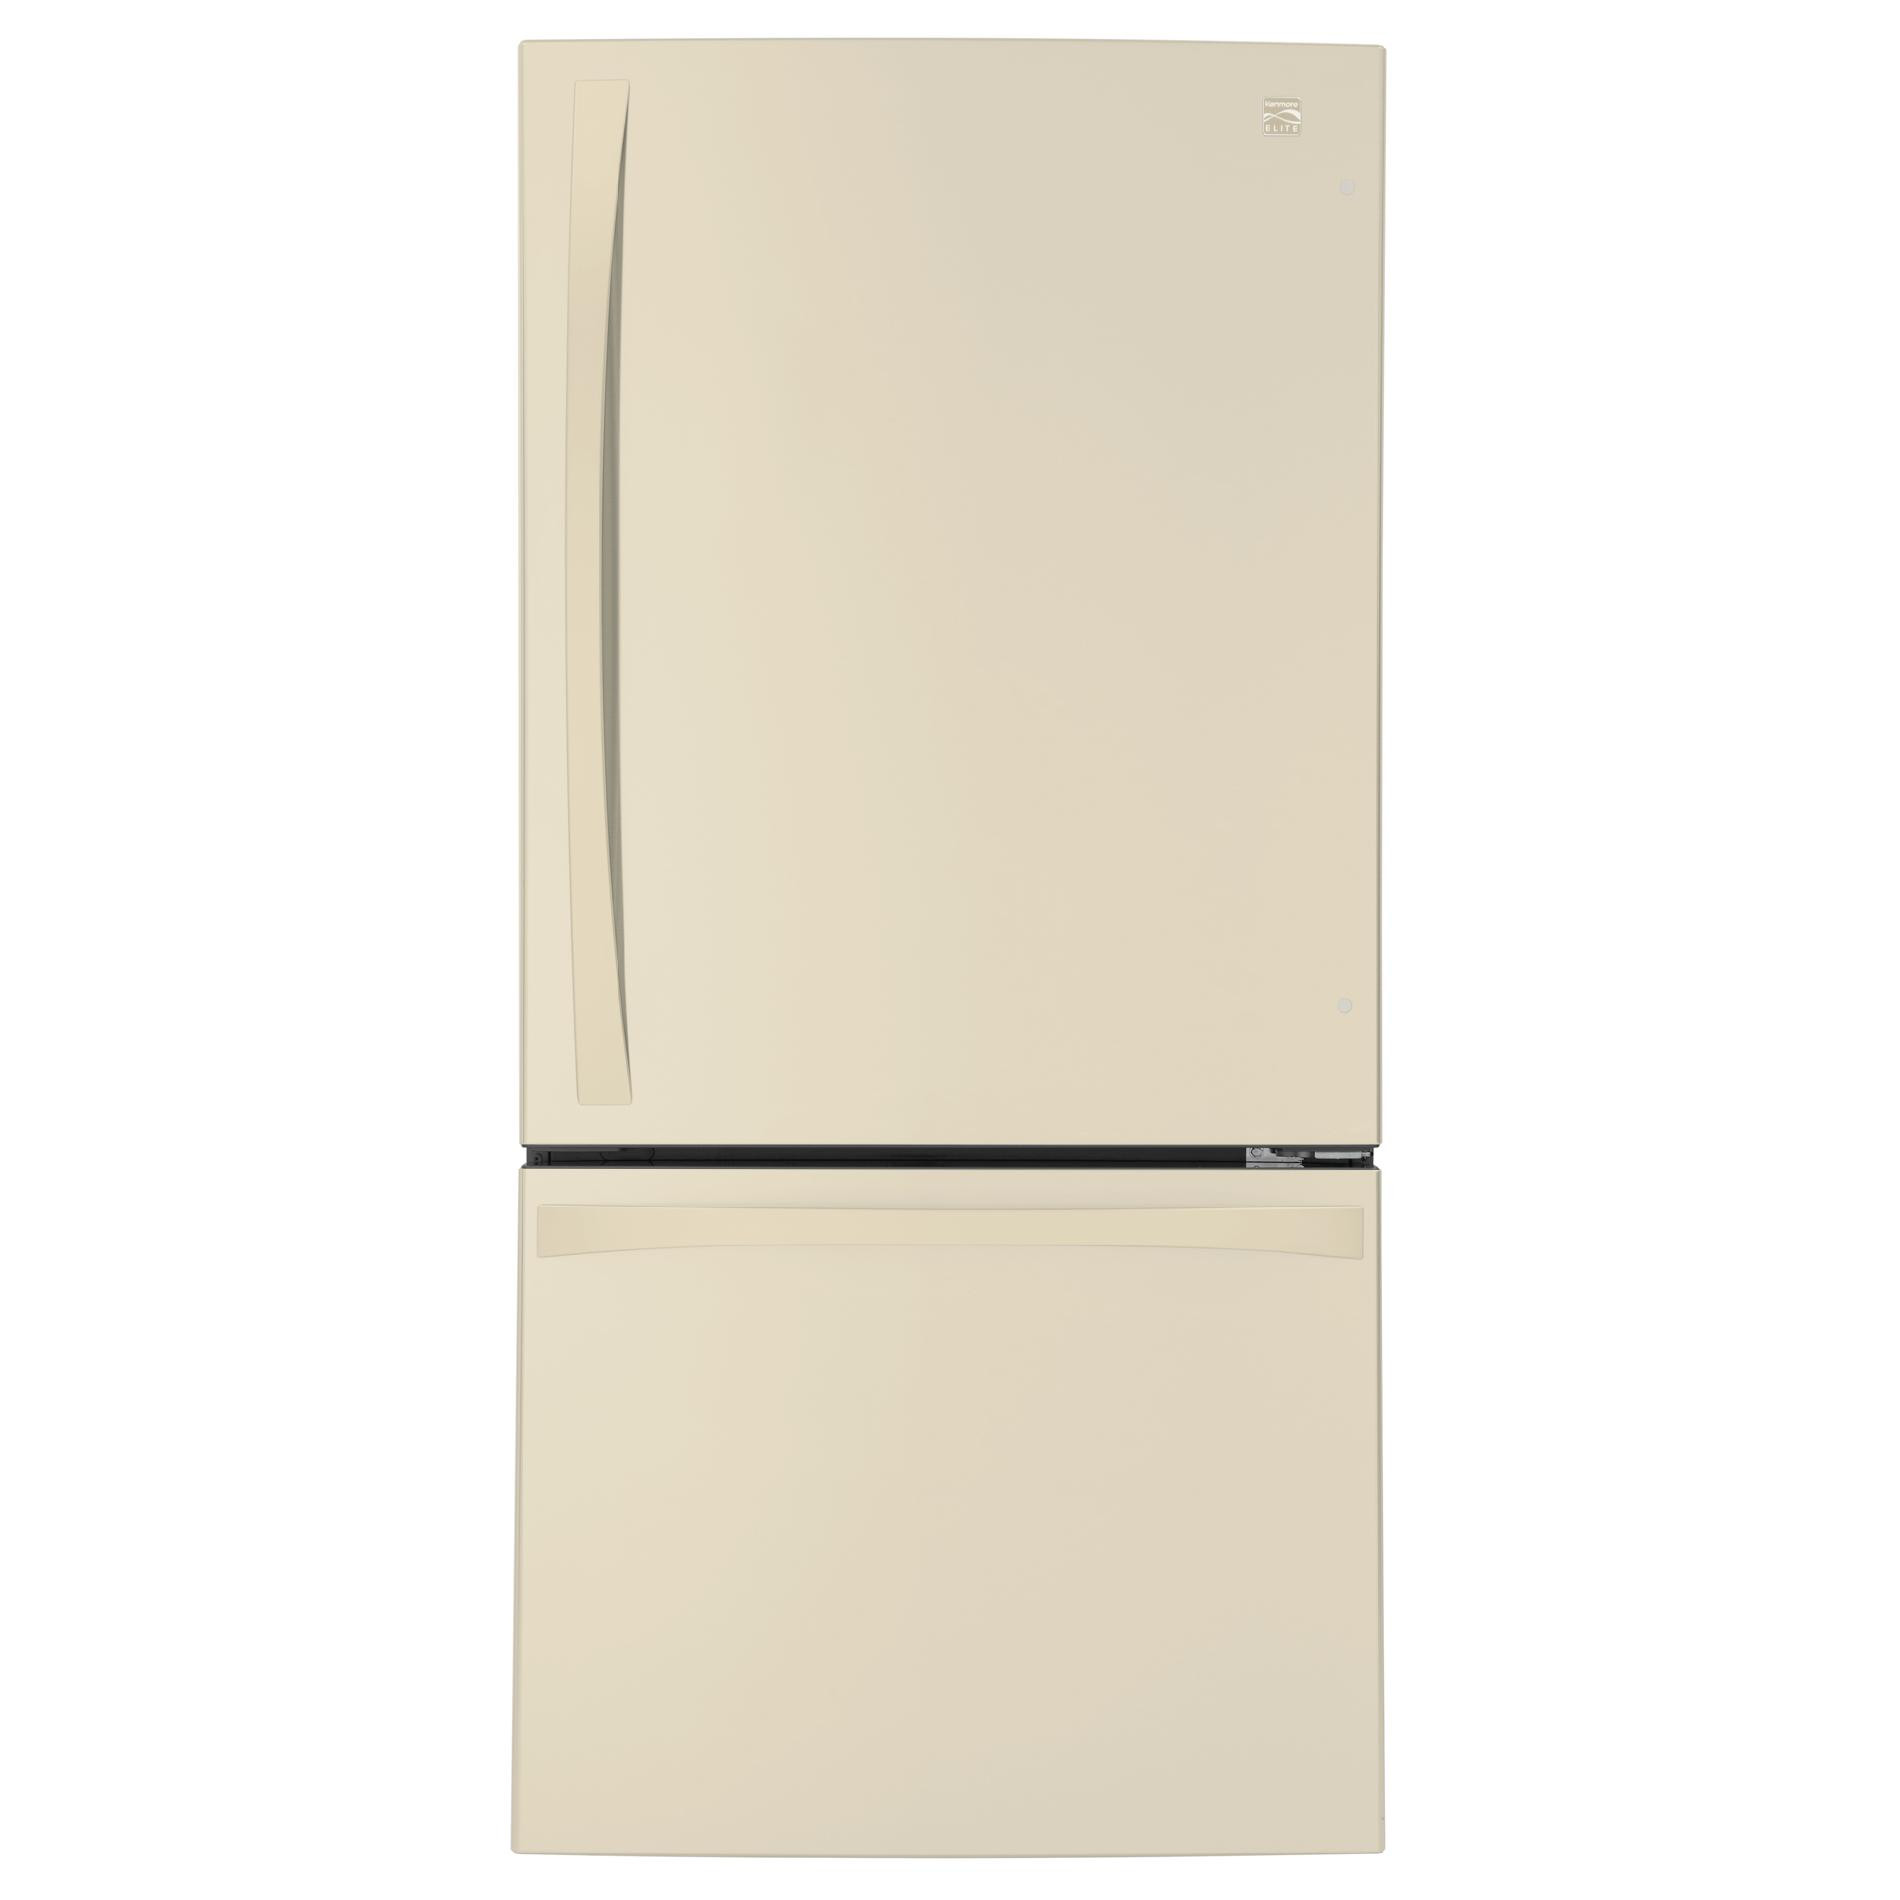 Bisque Refrigerator Bottom Freezer
 Kenmore Elite 24 1 cu ft 33" Bottom Freezer